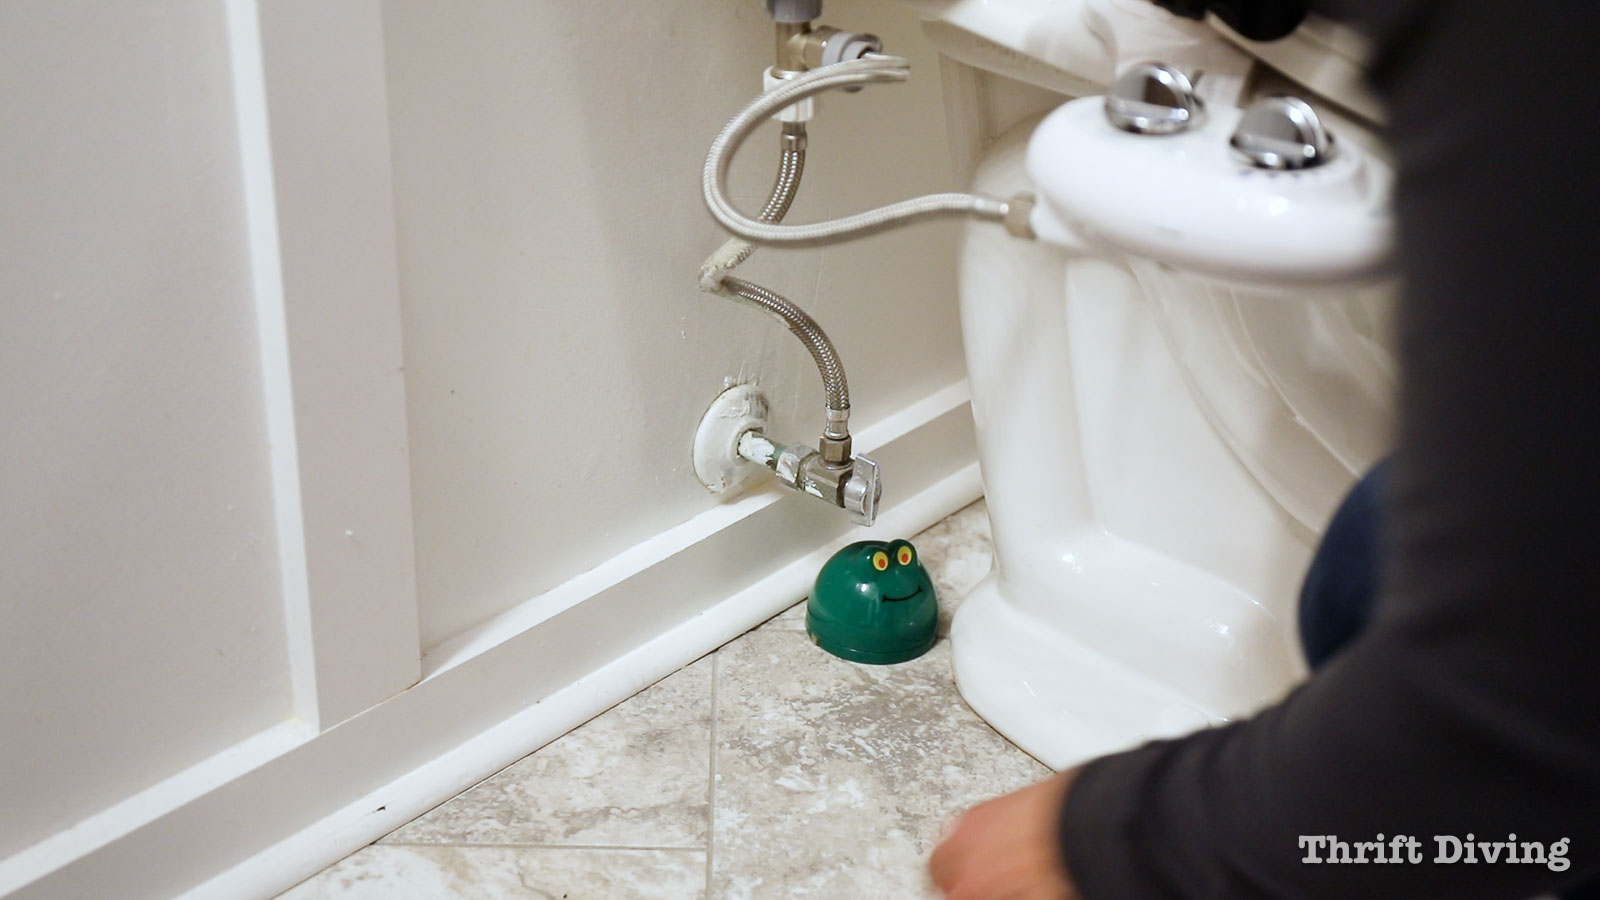 Leak detector next to the toilet. - 7 Home Maintenance Tasks - Thrift Diving